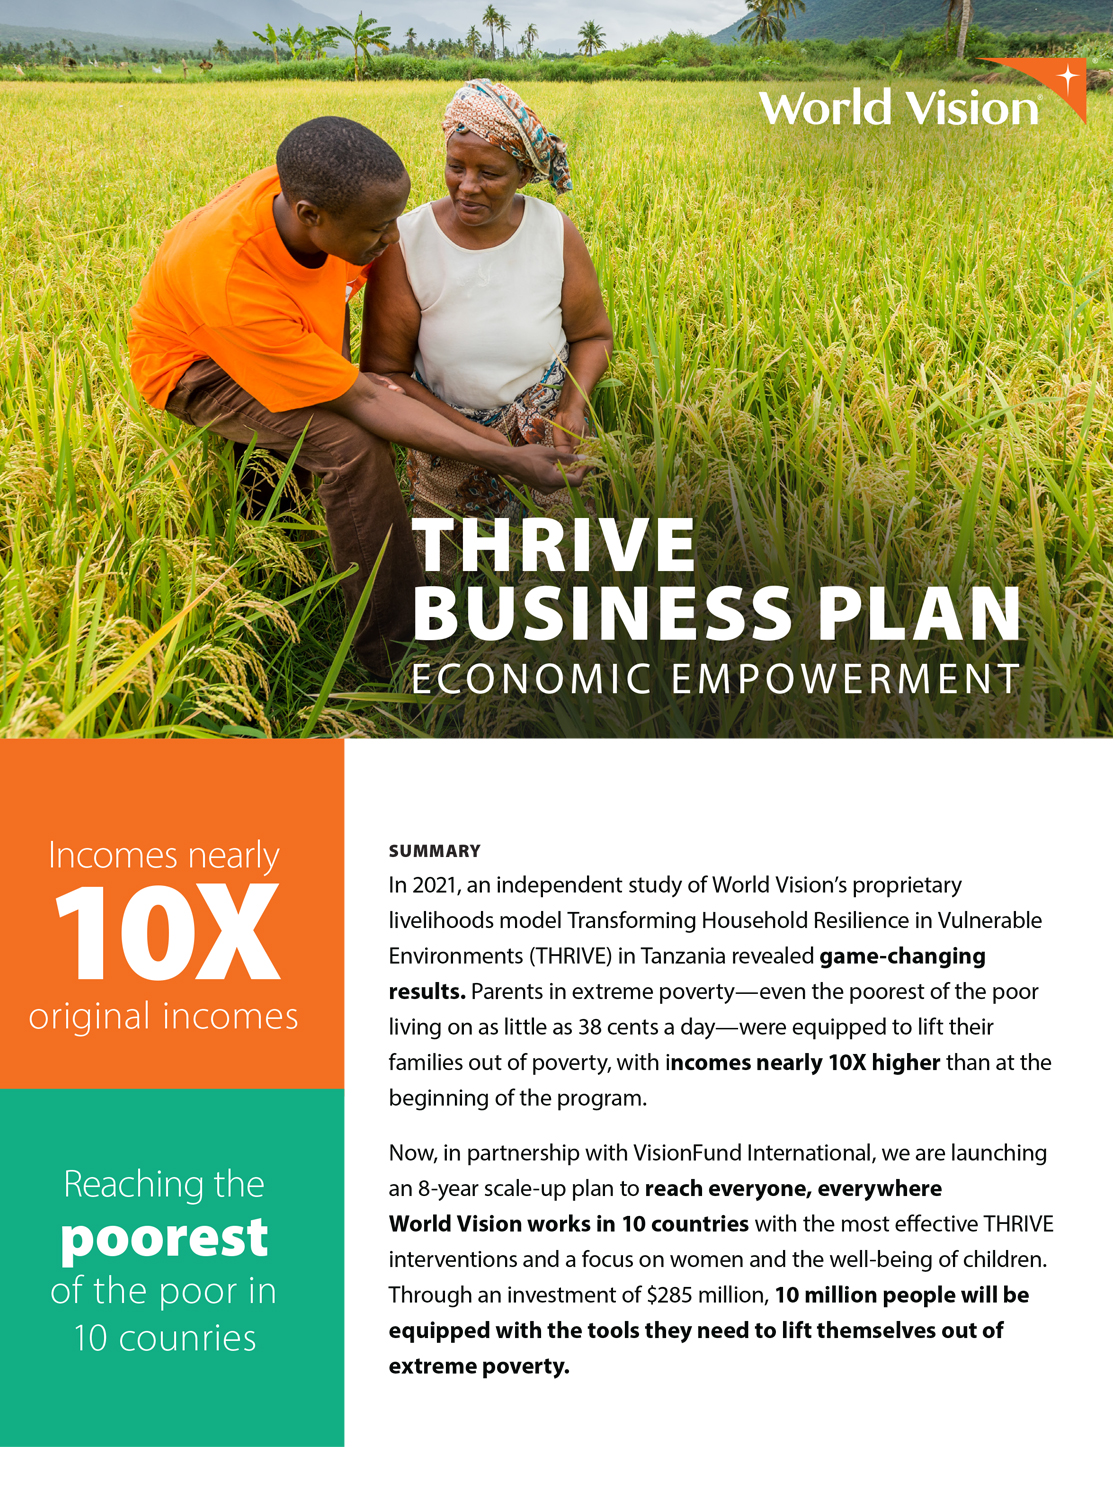 Economic Empowerment Business Plan: THRIVE 2030